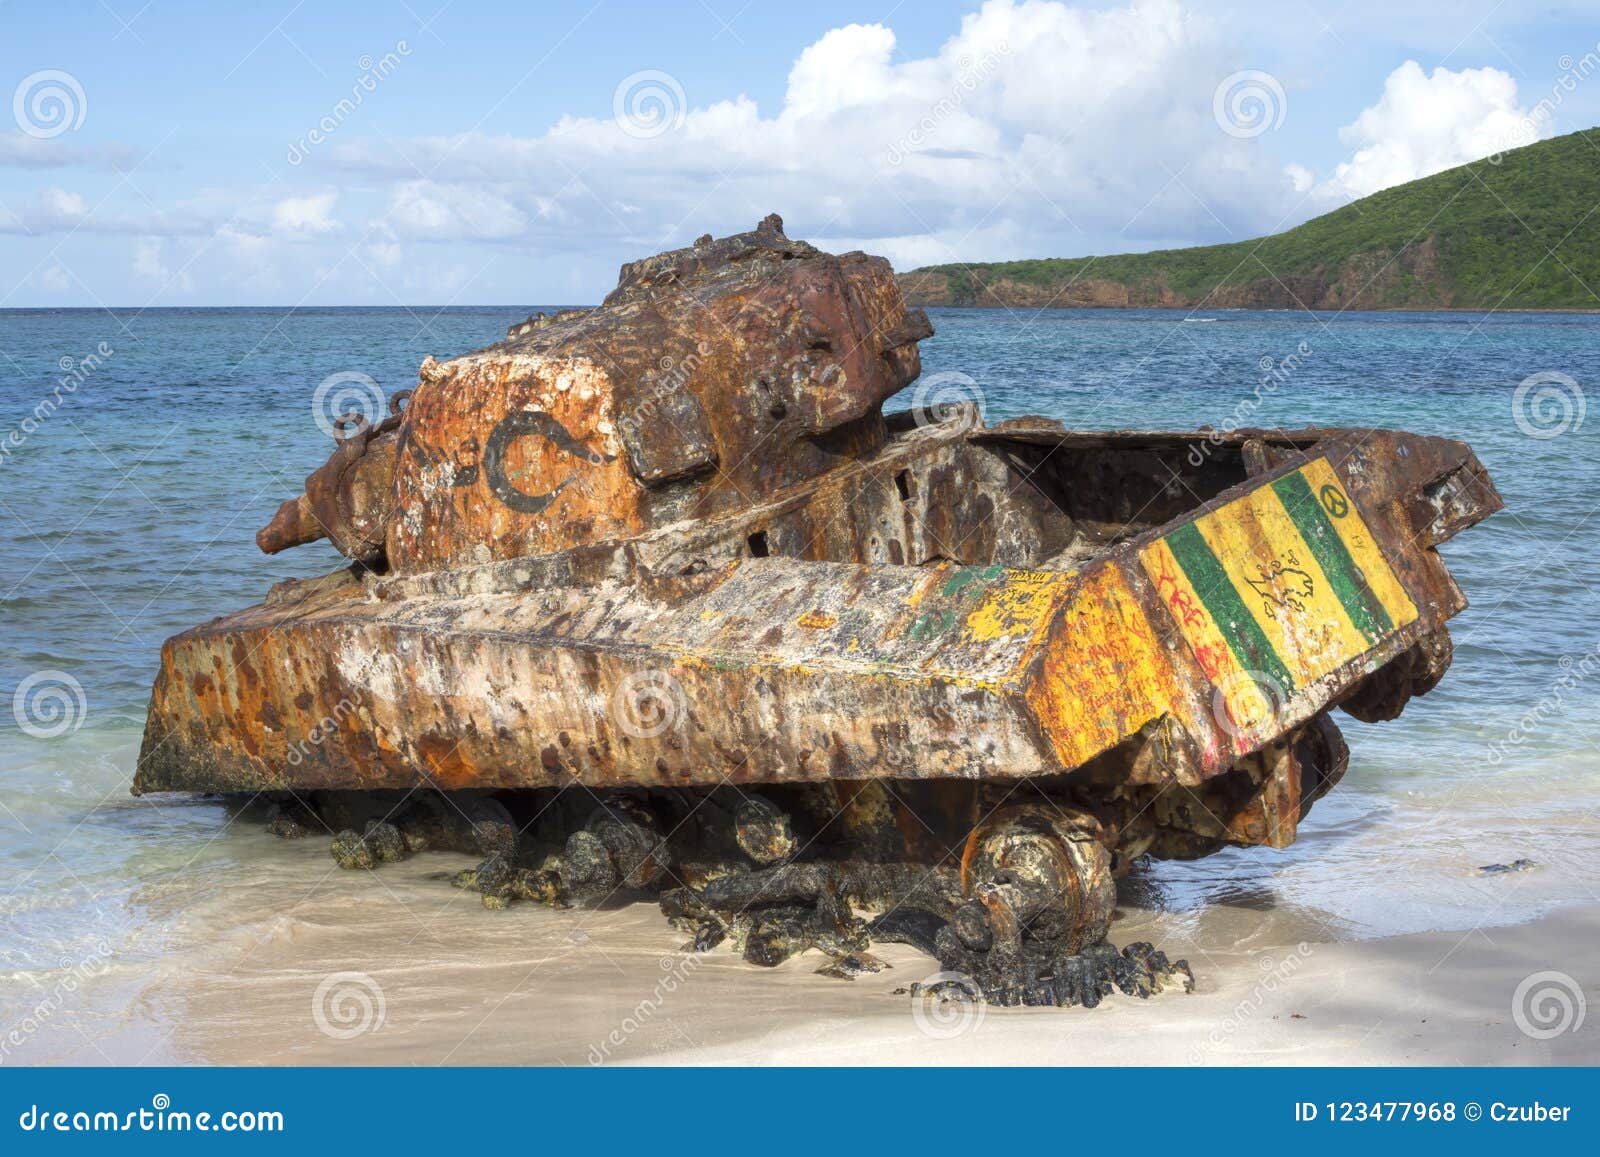 rusty sherman tank on flamenco beach of isla culebra